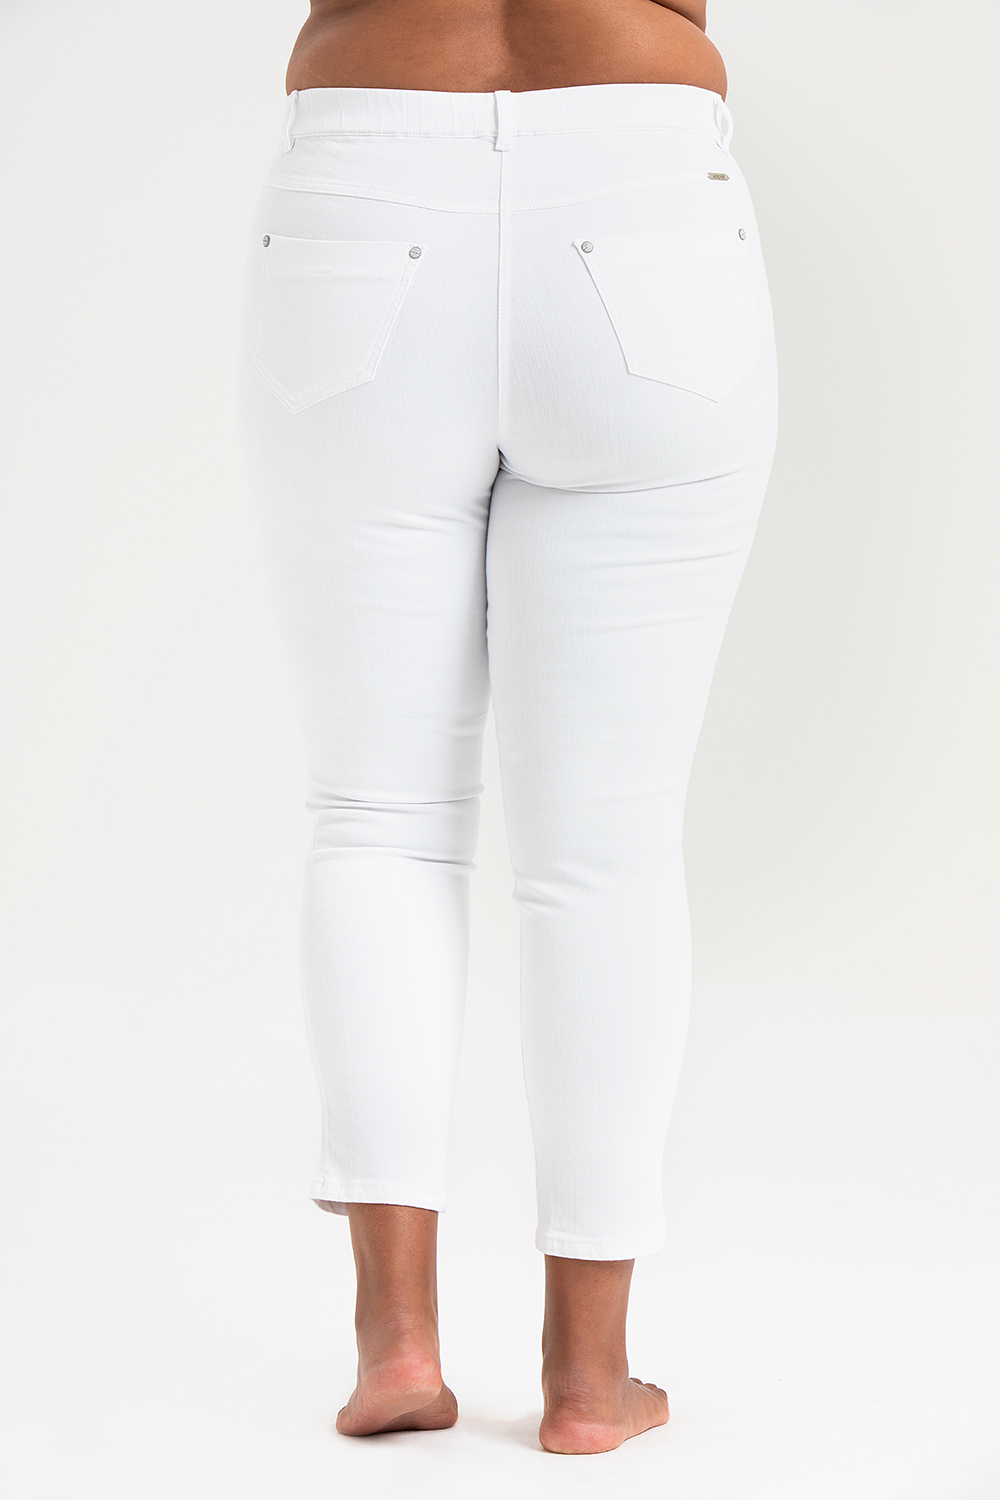 Vita stretchiga jeans i stora storlekar. Pamela jeans. Storlek 42-52. Baksida. AliceDot.